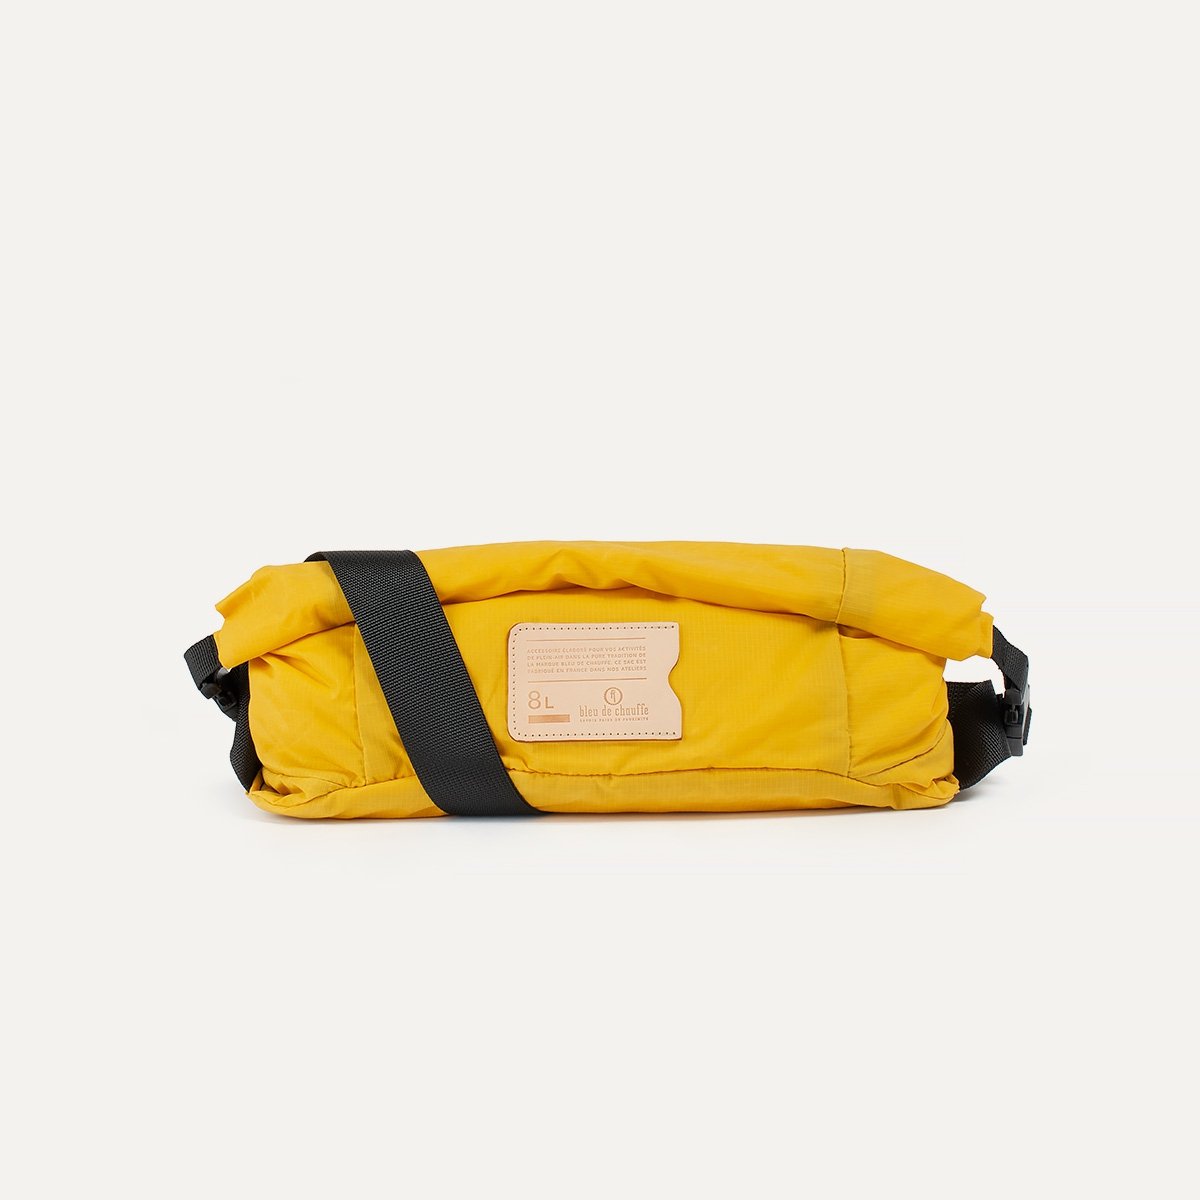 8L Bastille Belt bag - Sun Yellow (image n°1)